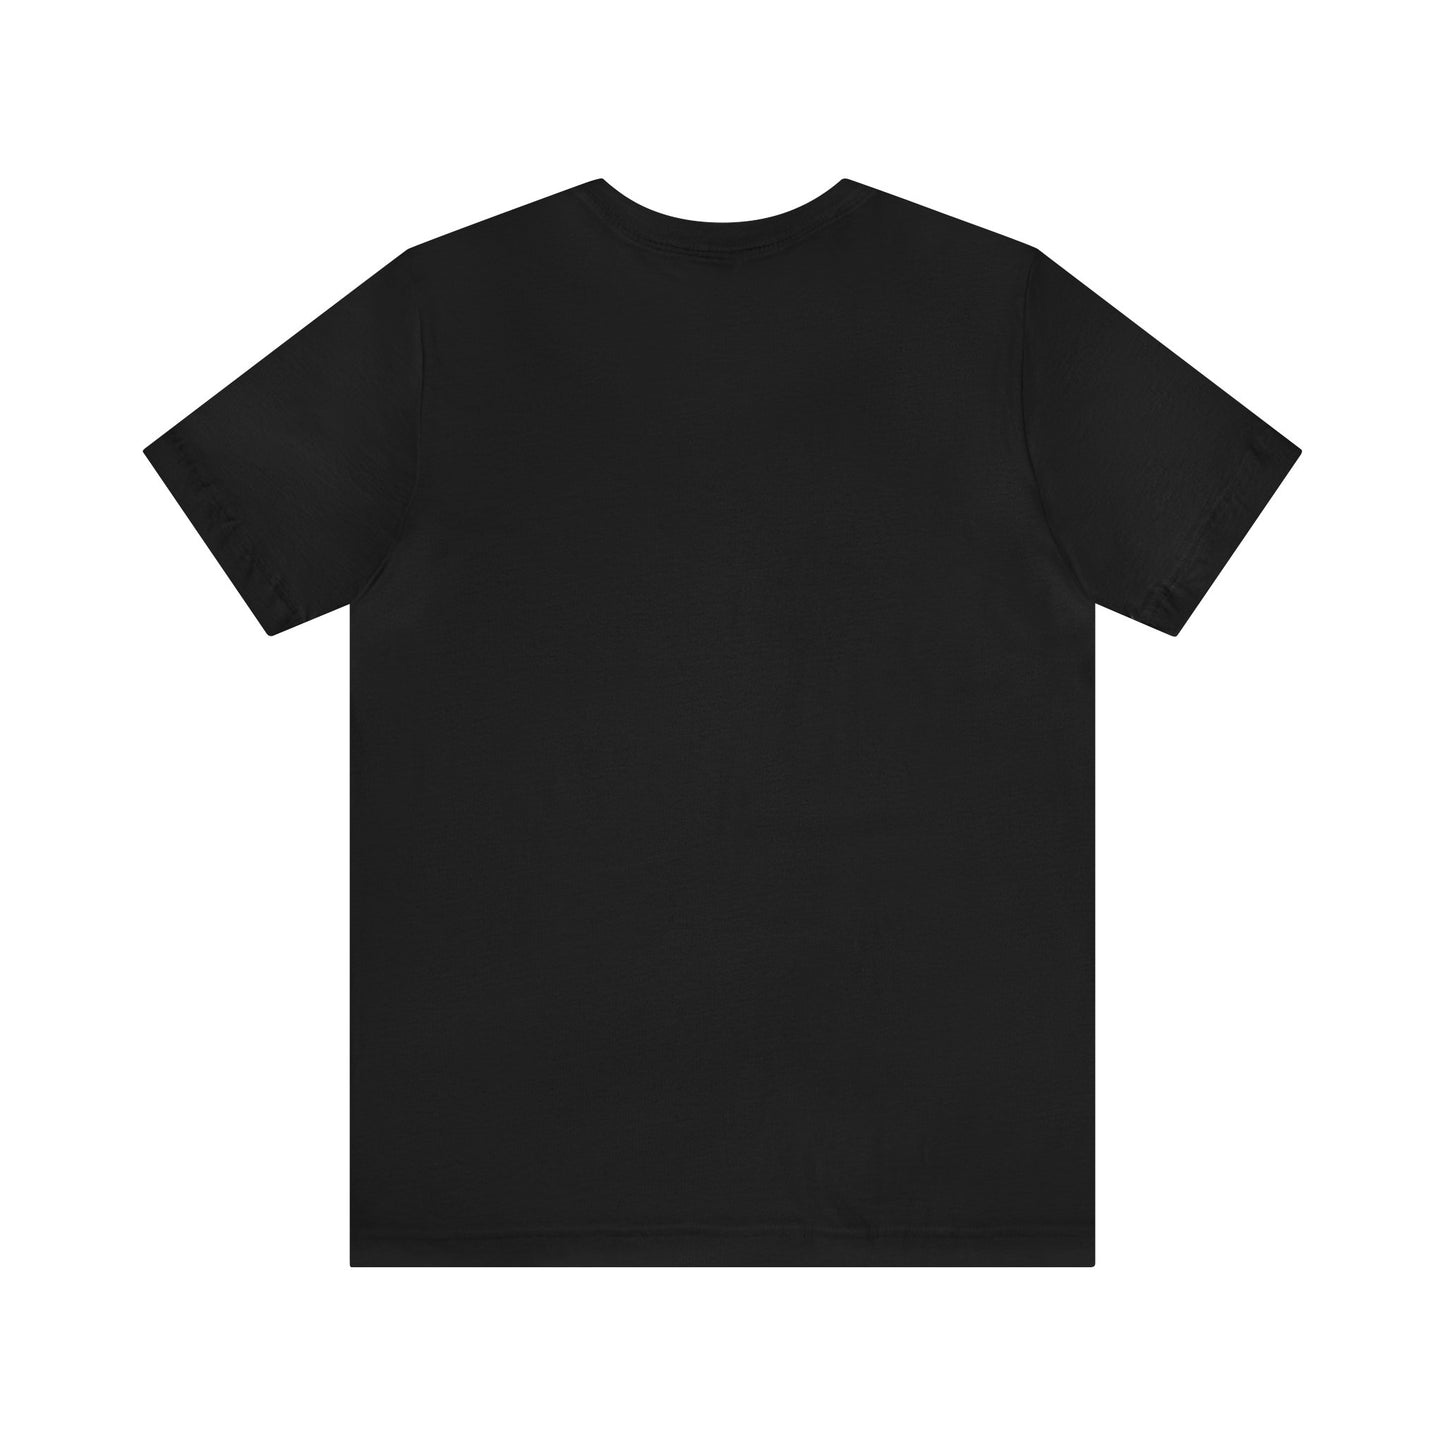 Winter Wolf, Soft 100% Jersey Cotton T-Shirt, Unisex, Short Sleeve, Retail Fit